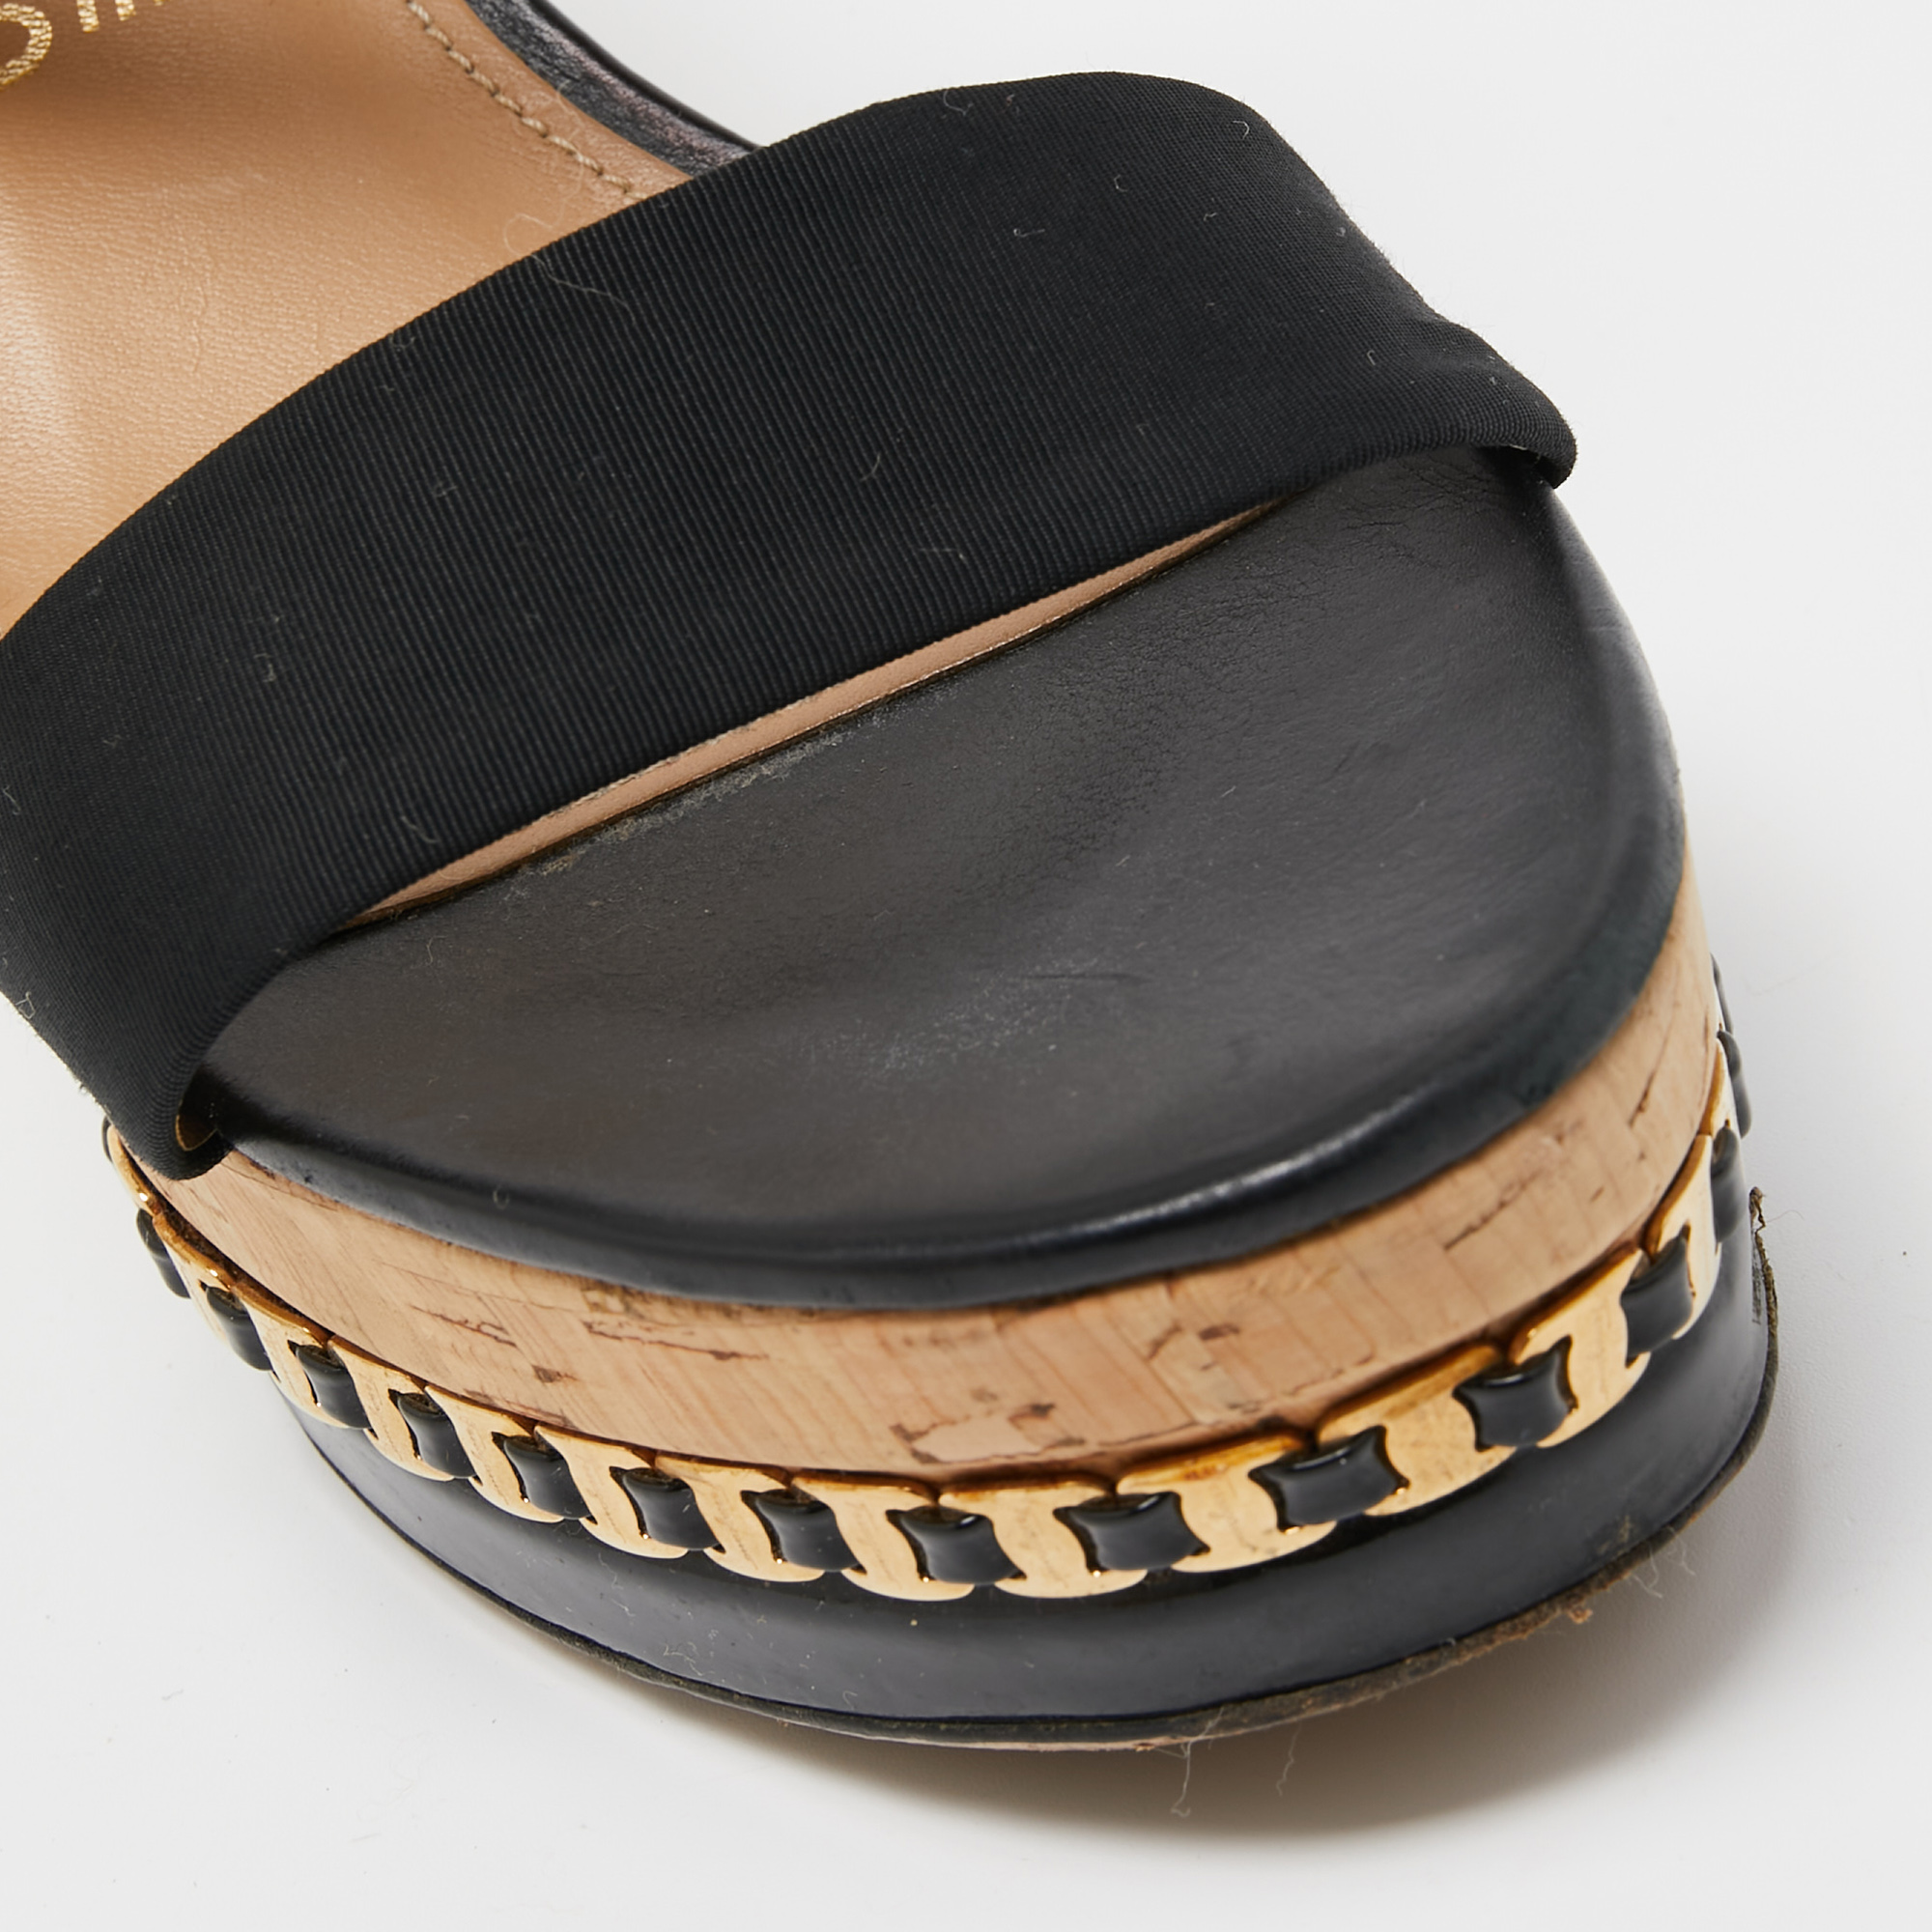 Salvatore Ferragamo Black Leather And Canvas Bernie Wedge Sandals Size 39.5